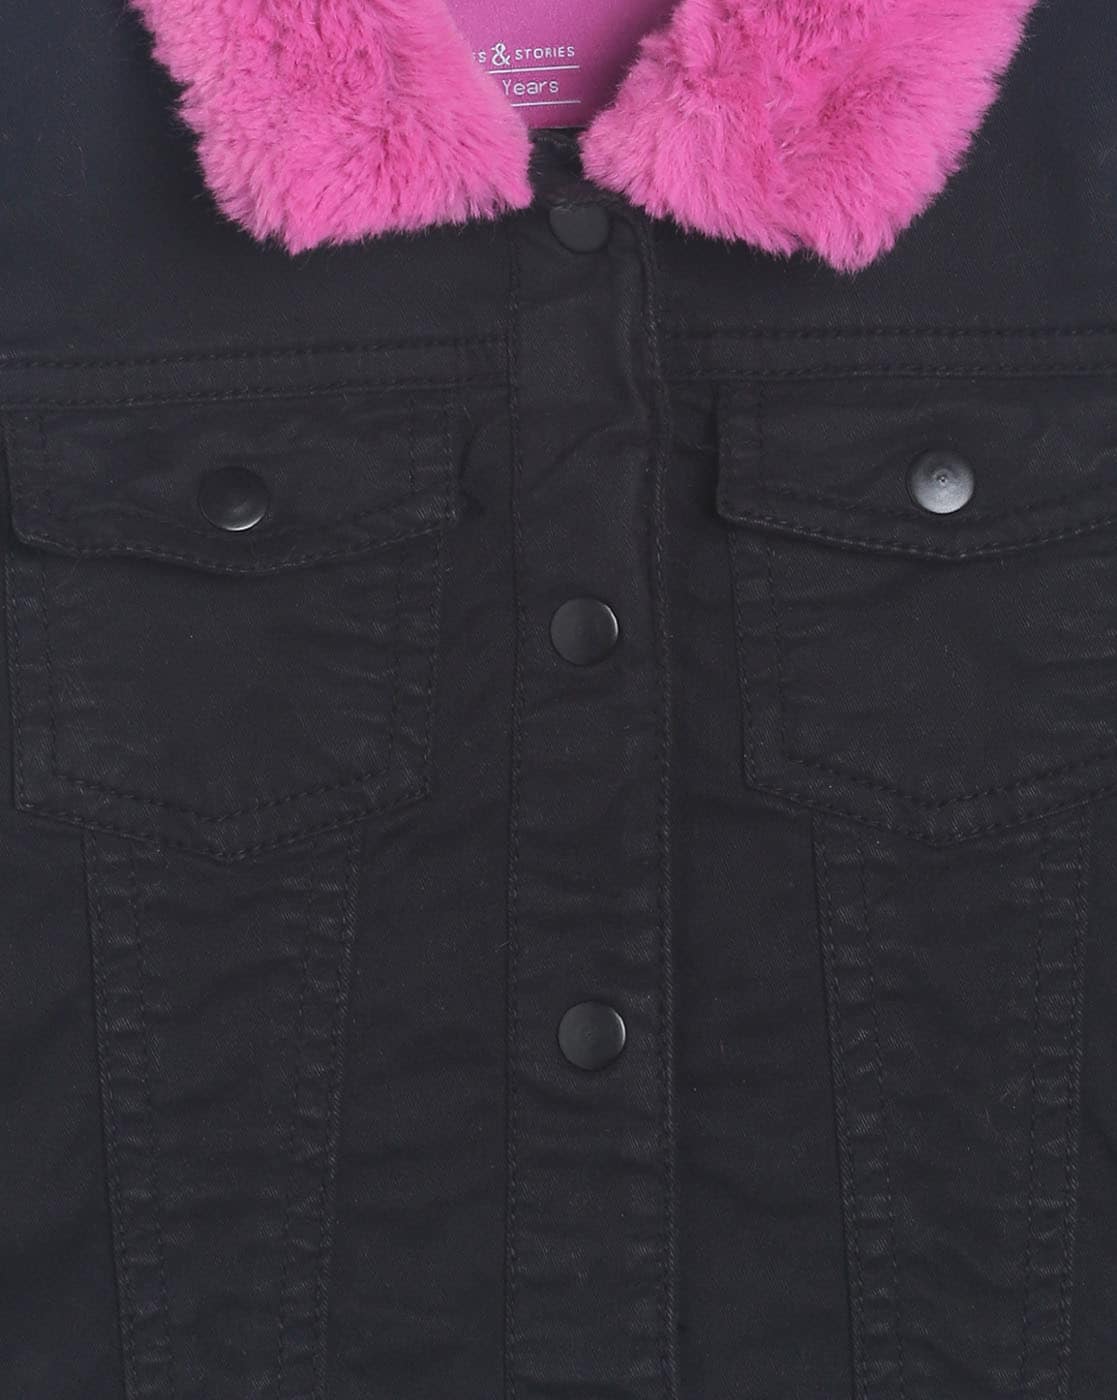 Denim Jacket Collar Made Artificial Pink Stock Photo 1649117599 |  Shutterstock